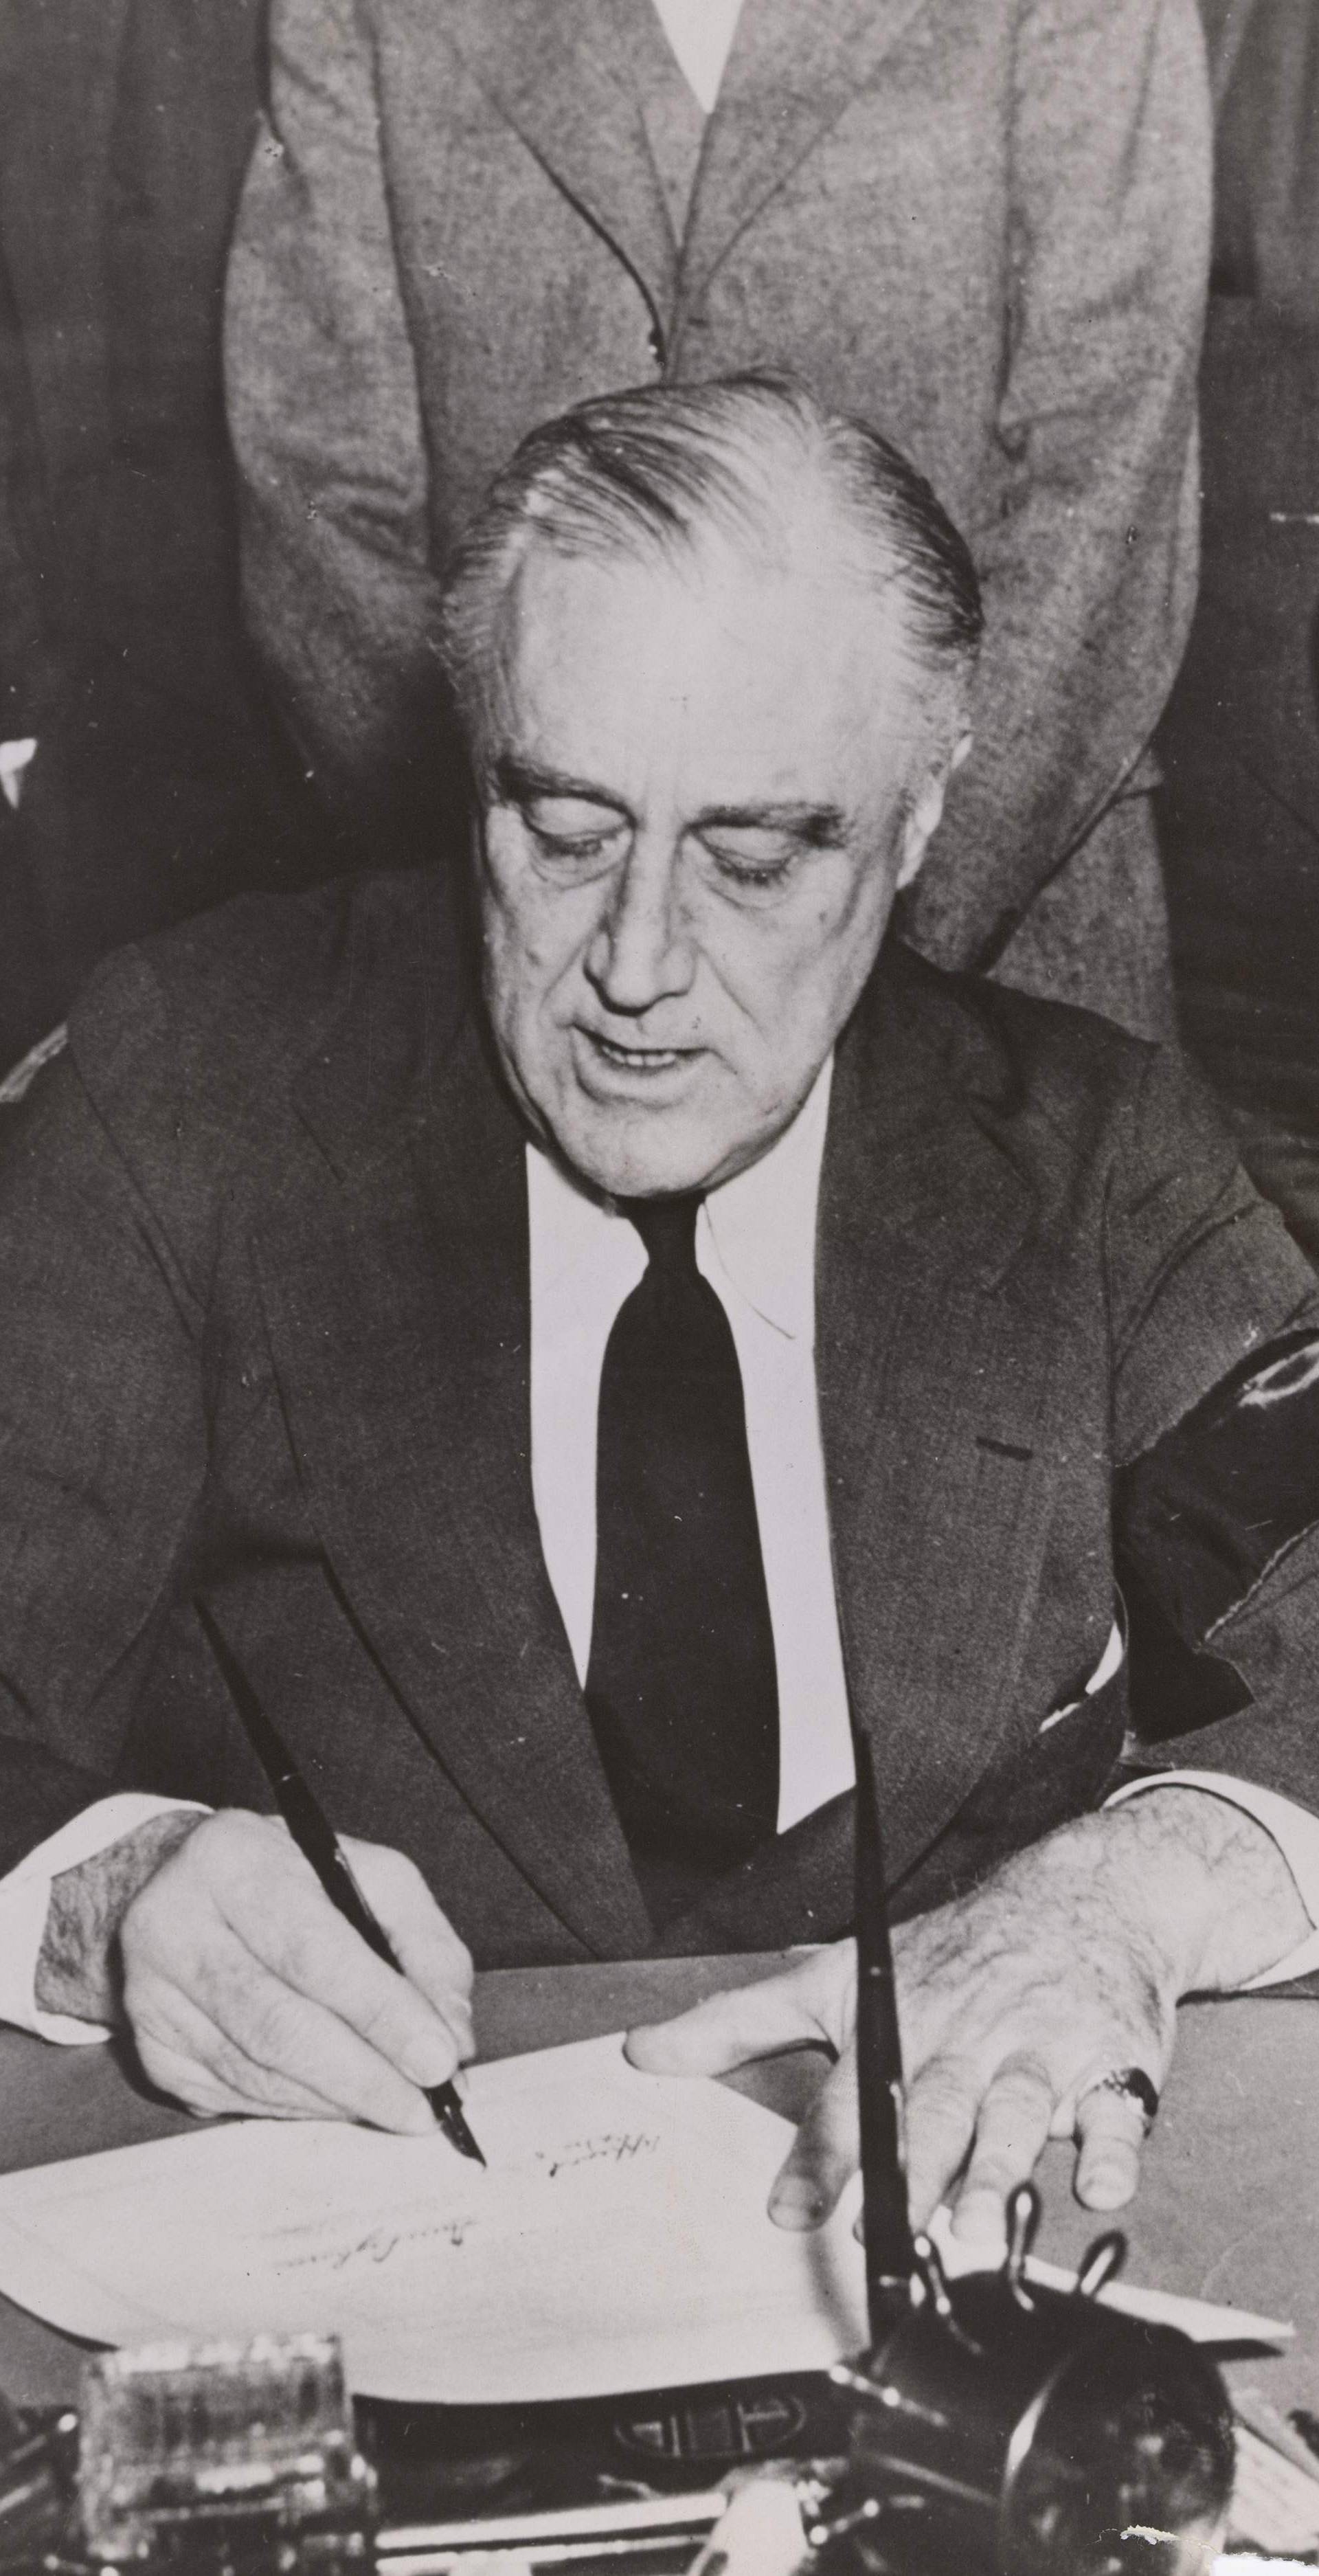 U.S. President Frankin Delano Roosevelt signs the declaration of war on Japan in Washington